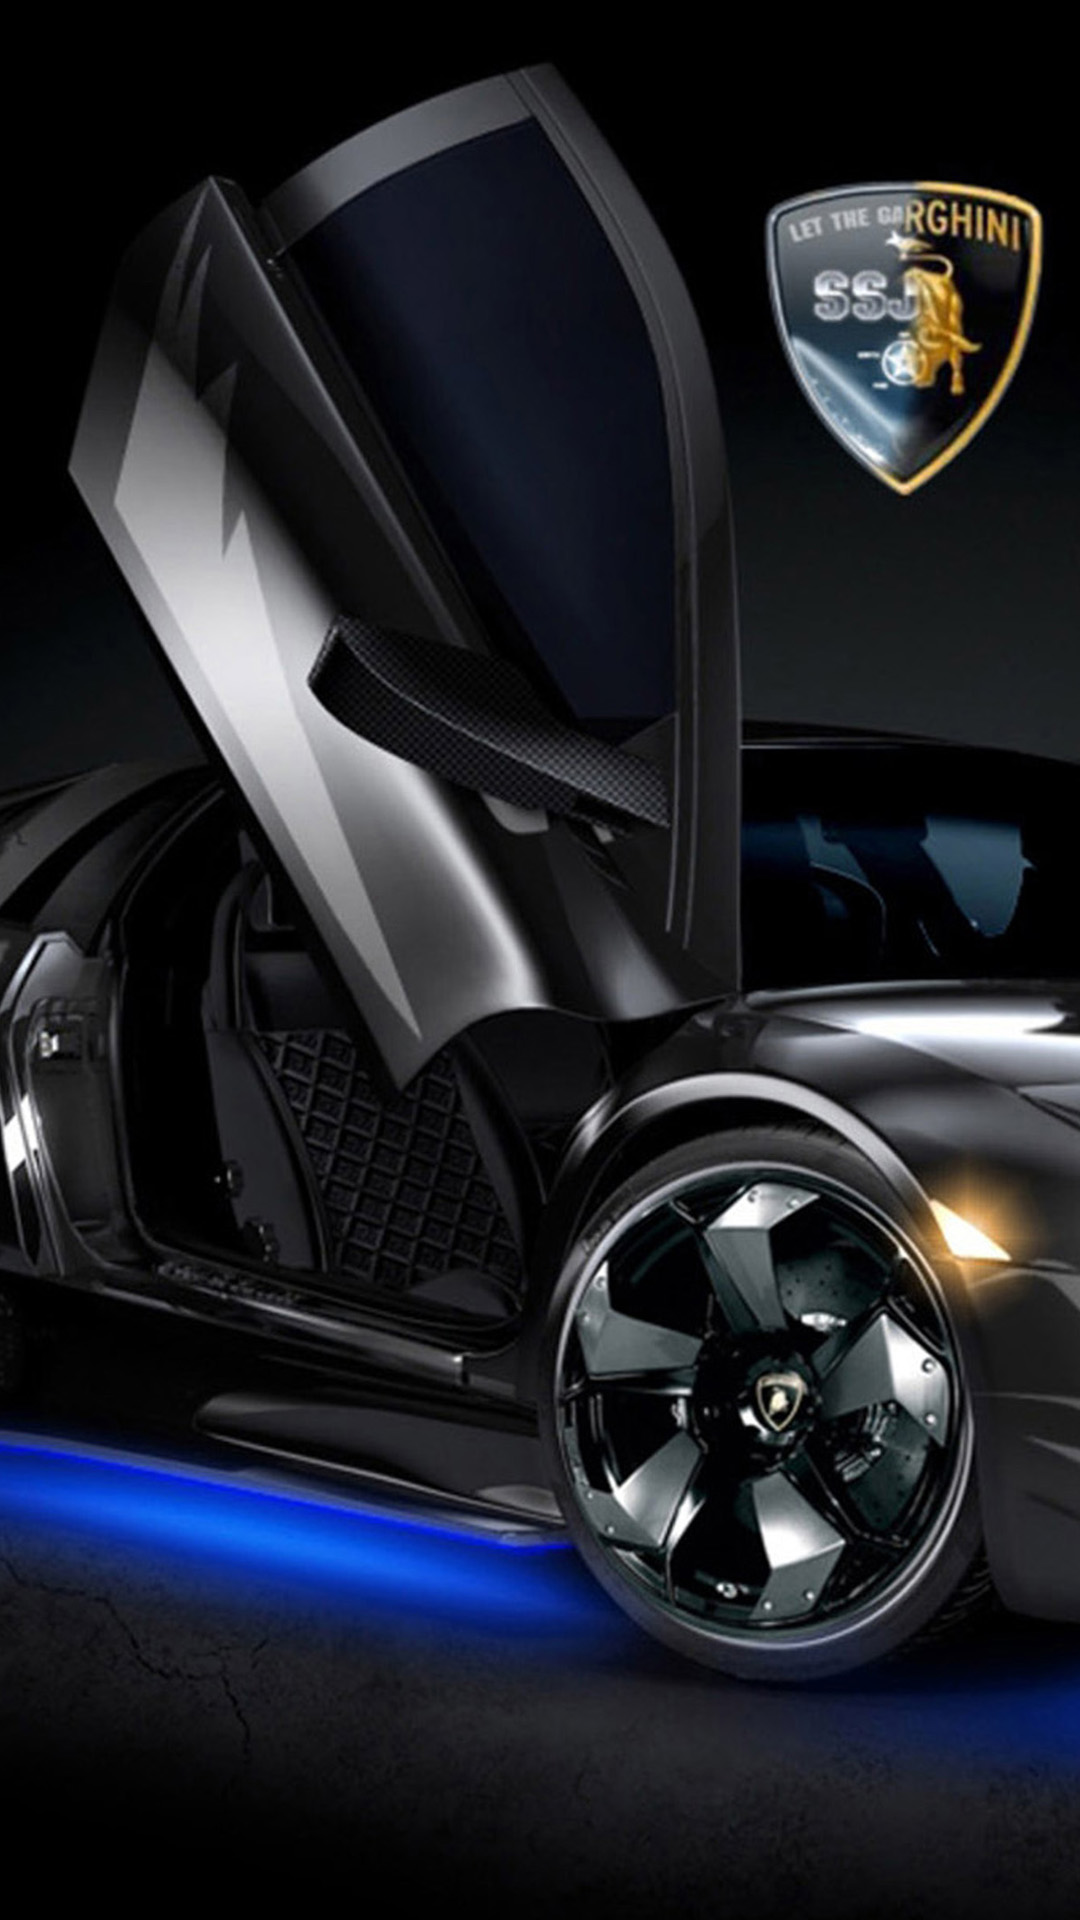 Lamborghini Car Bat Android Wallpaper Android Hd Wallpapers